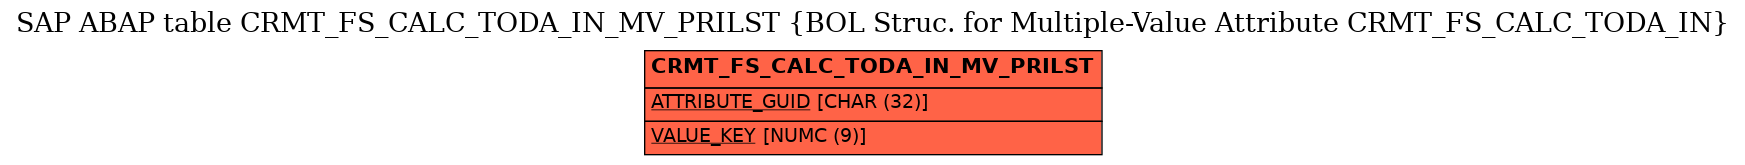 E-R Diagram for table CRMT_FS_CALC_TODA_IN_MV_PRILST (BOL Struc. for Multiple-Value Attribute CRMT_FS_CALC_TODA_IN)